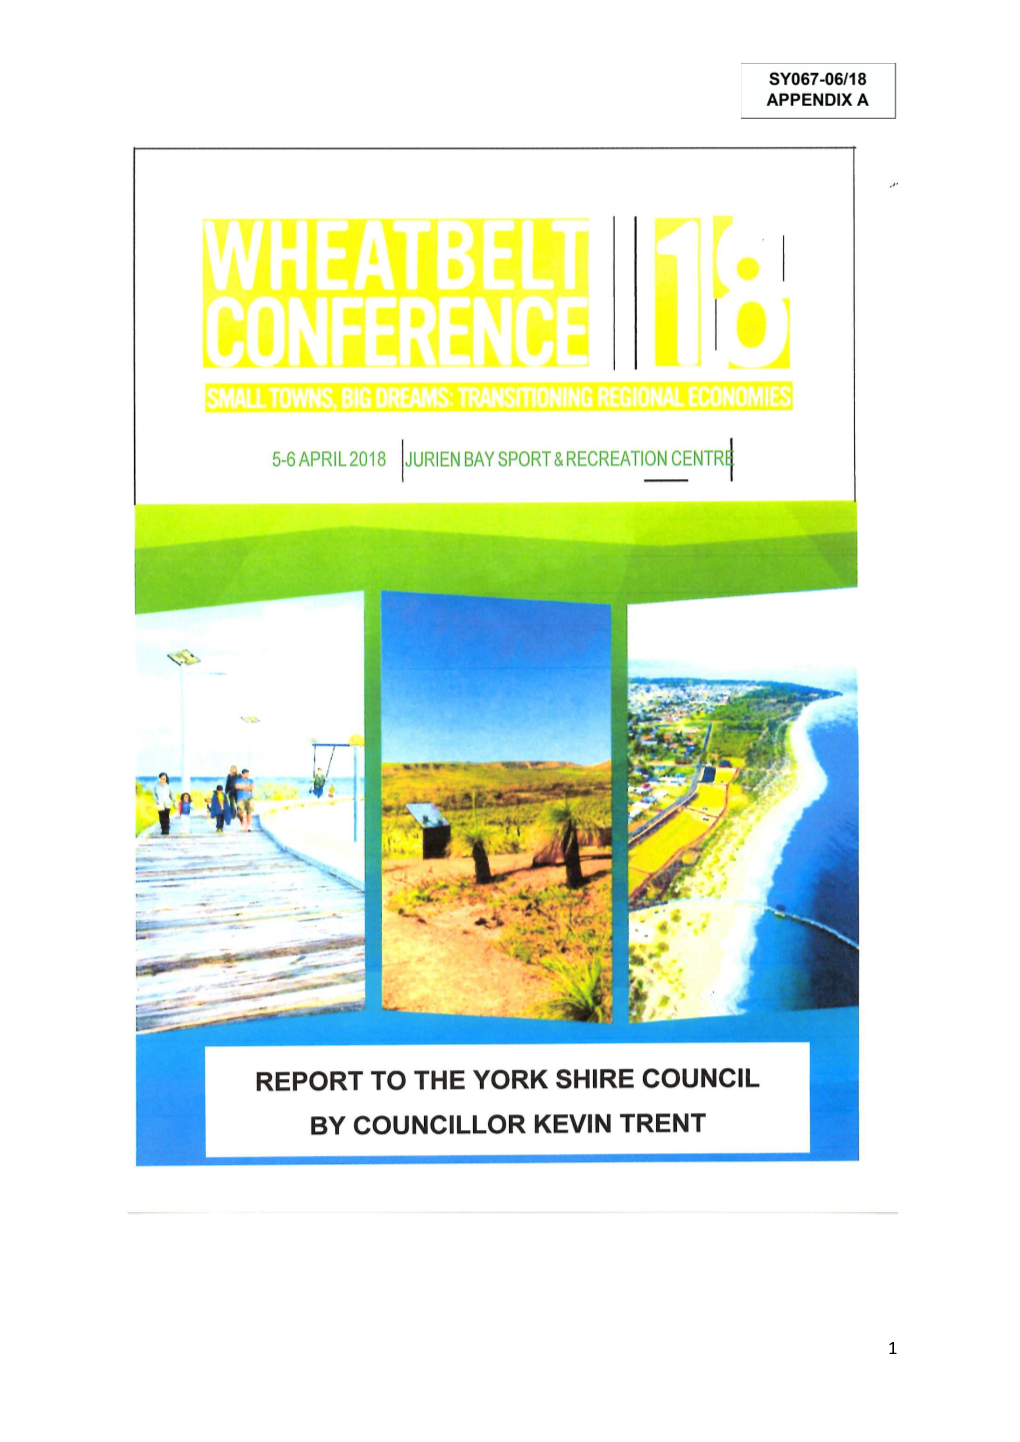 Wheatbelt Conference